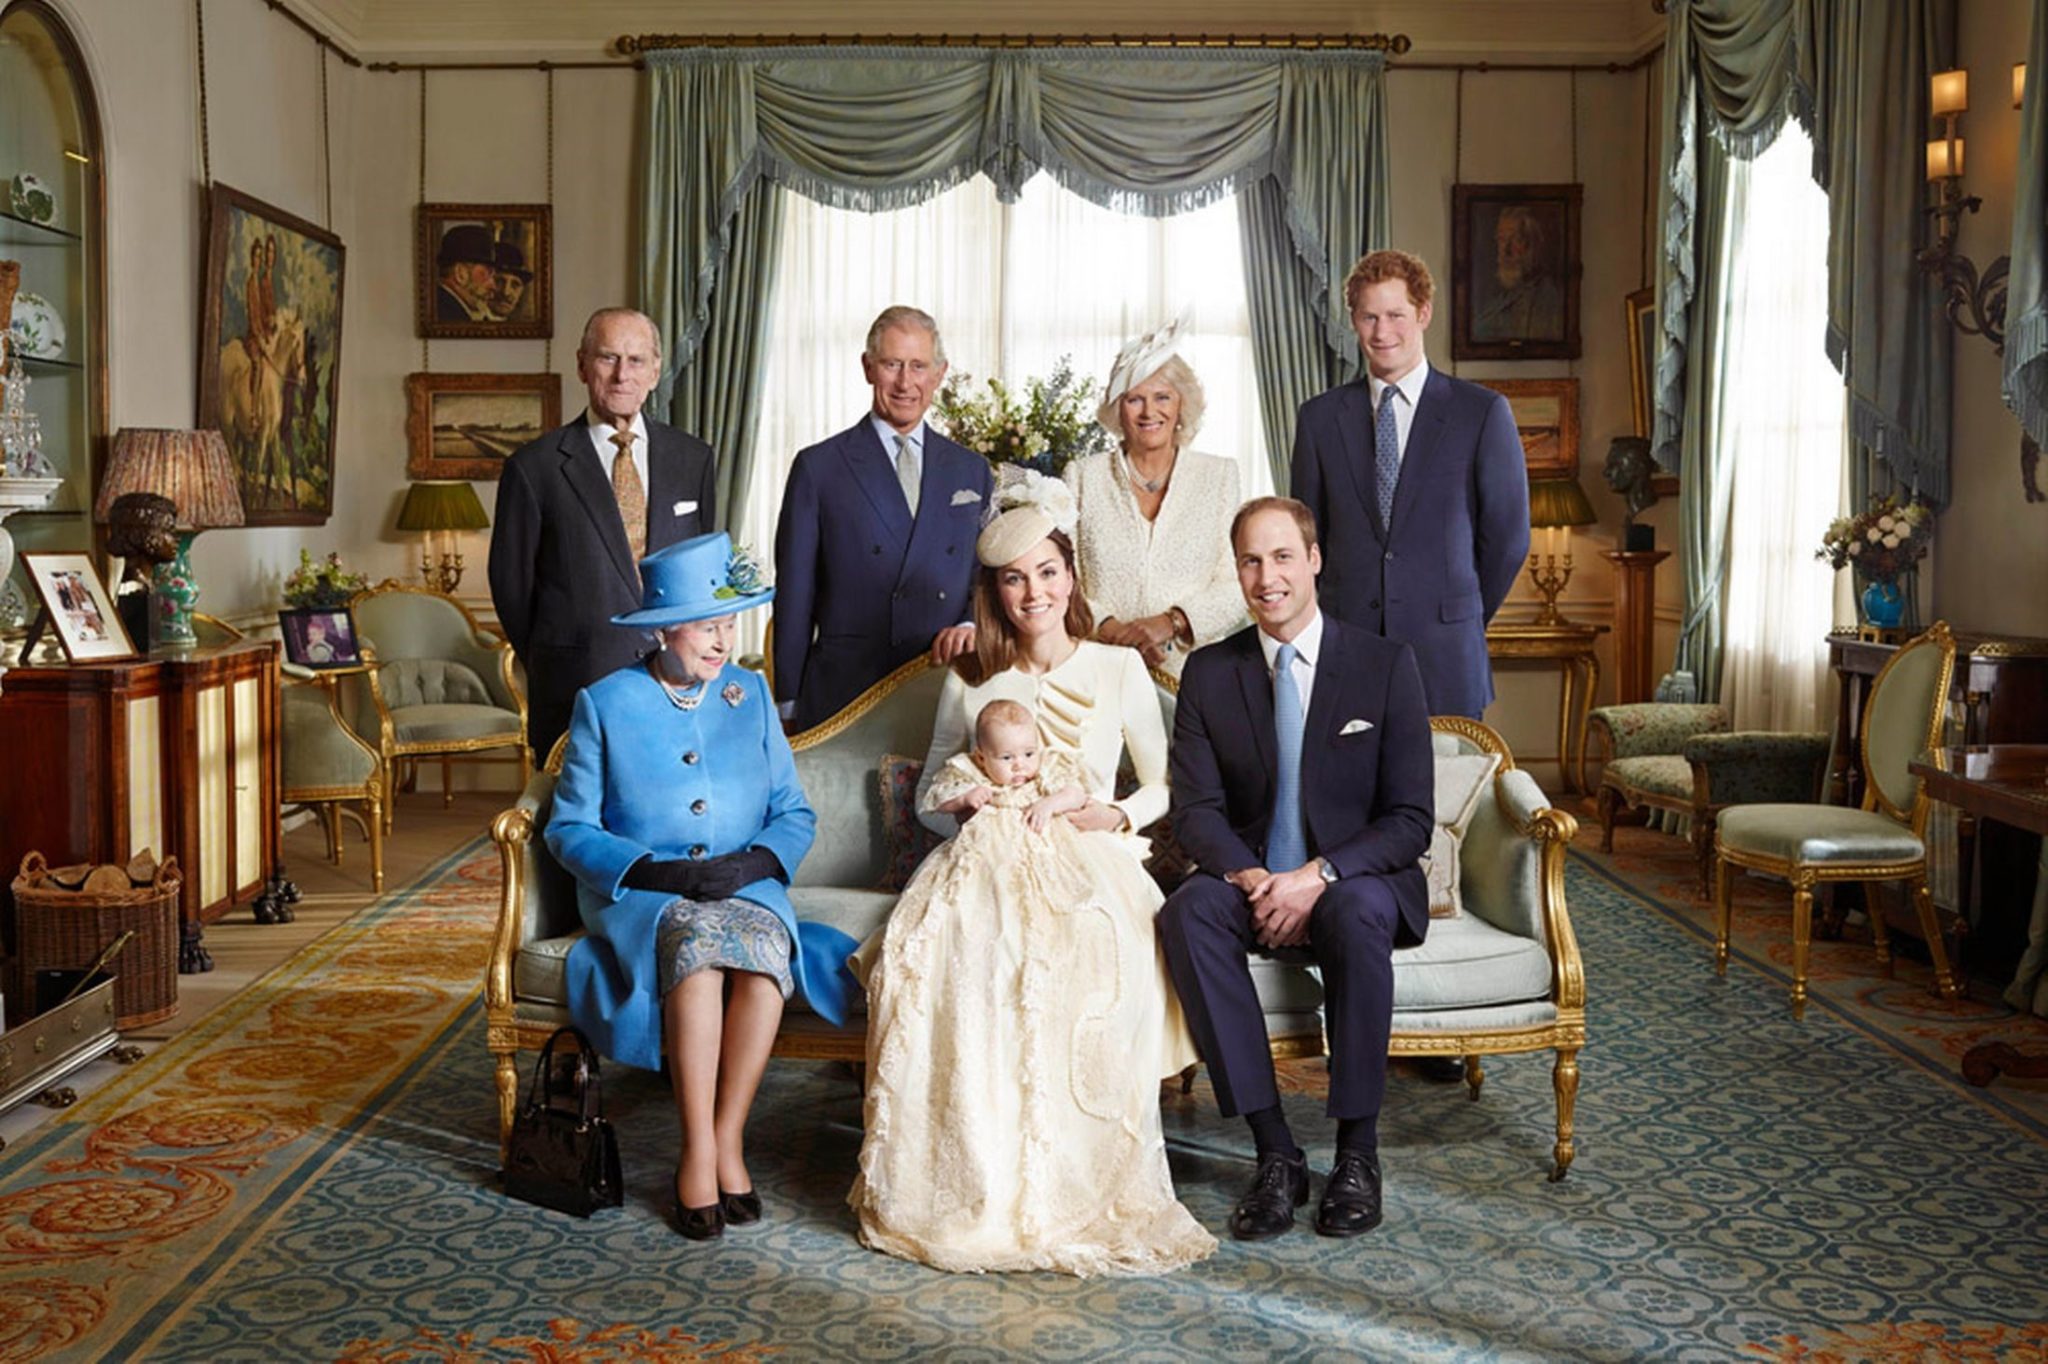 https://www.yizuo-media.com/photos/new/albums/userpics/10001/2/british-royal-family-portrait.jpg